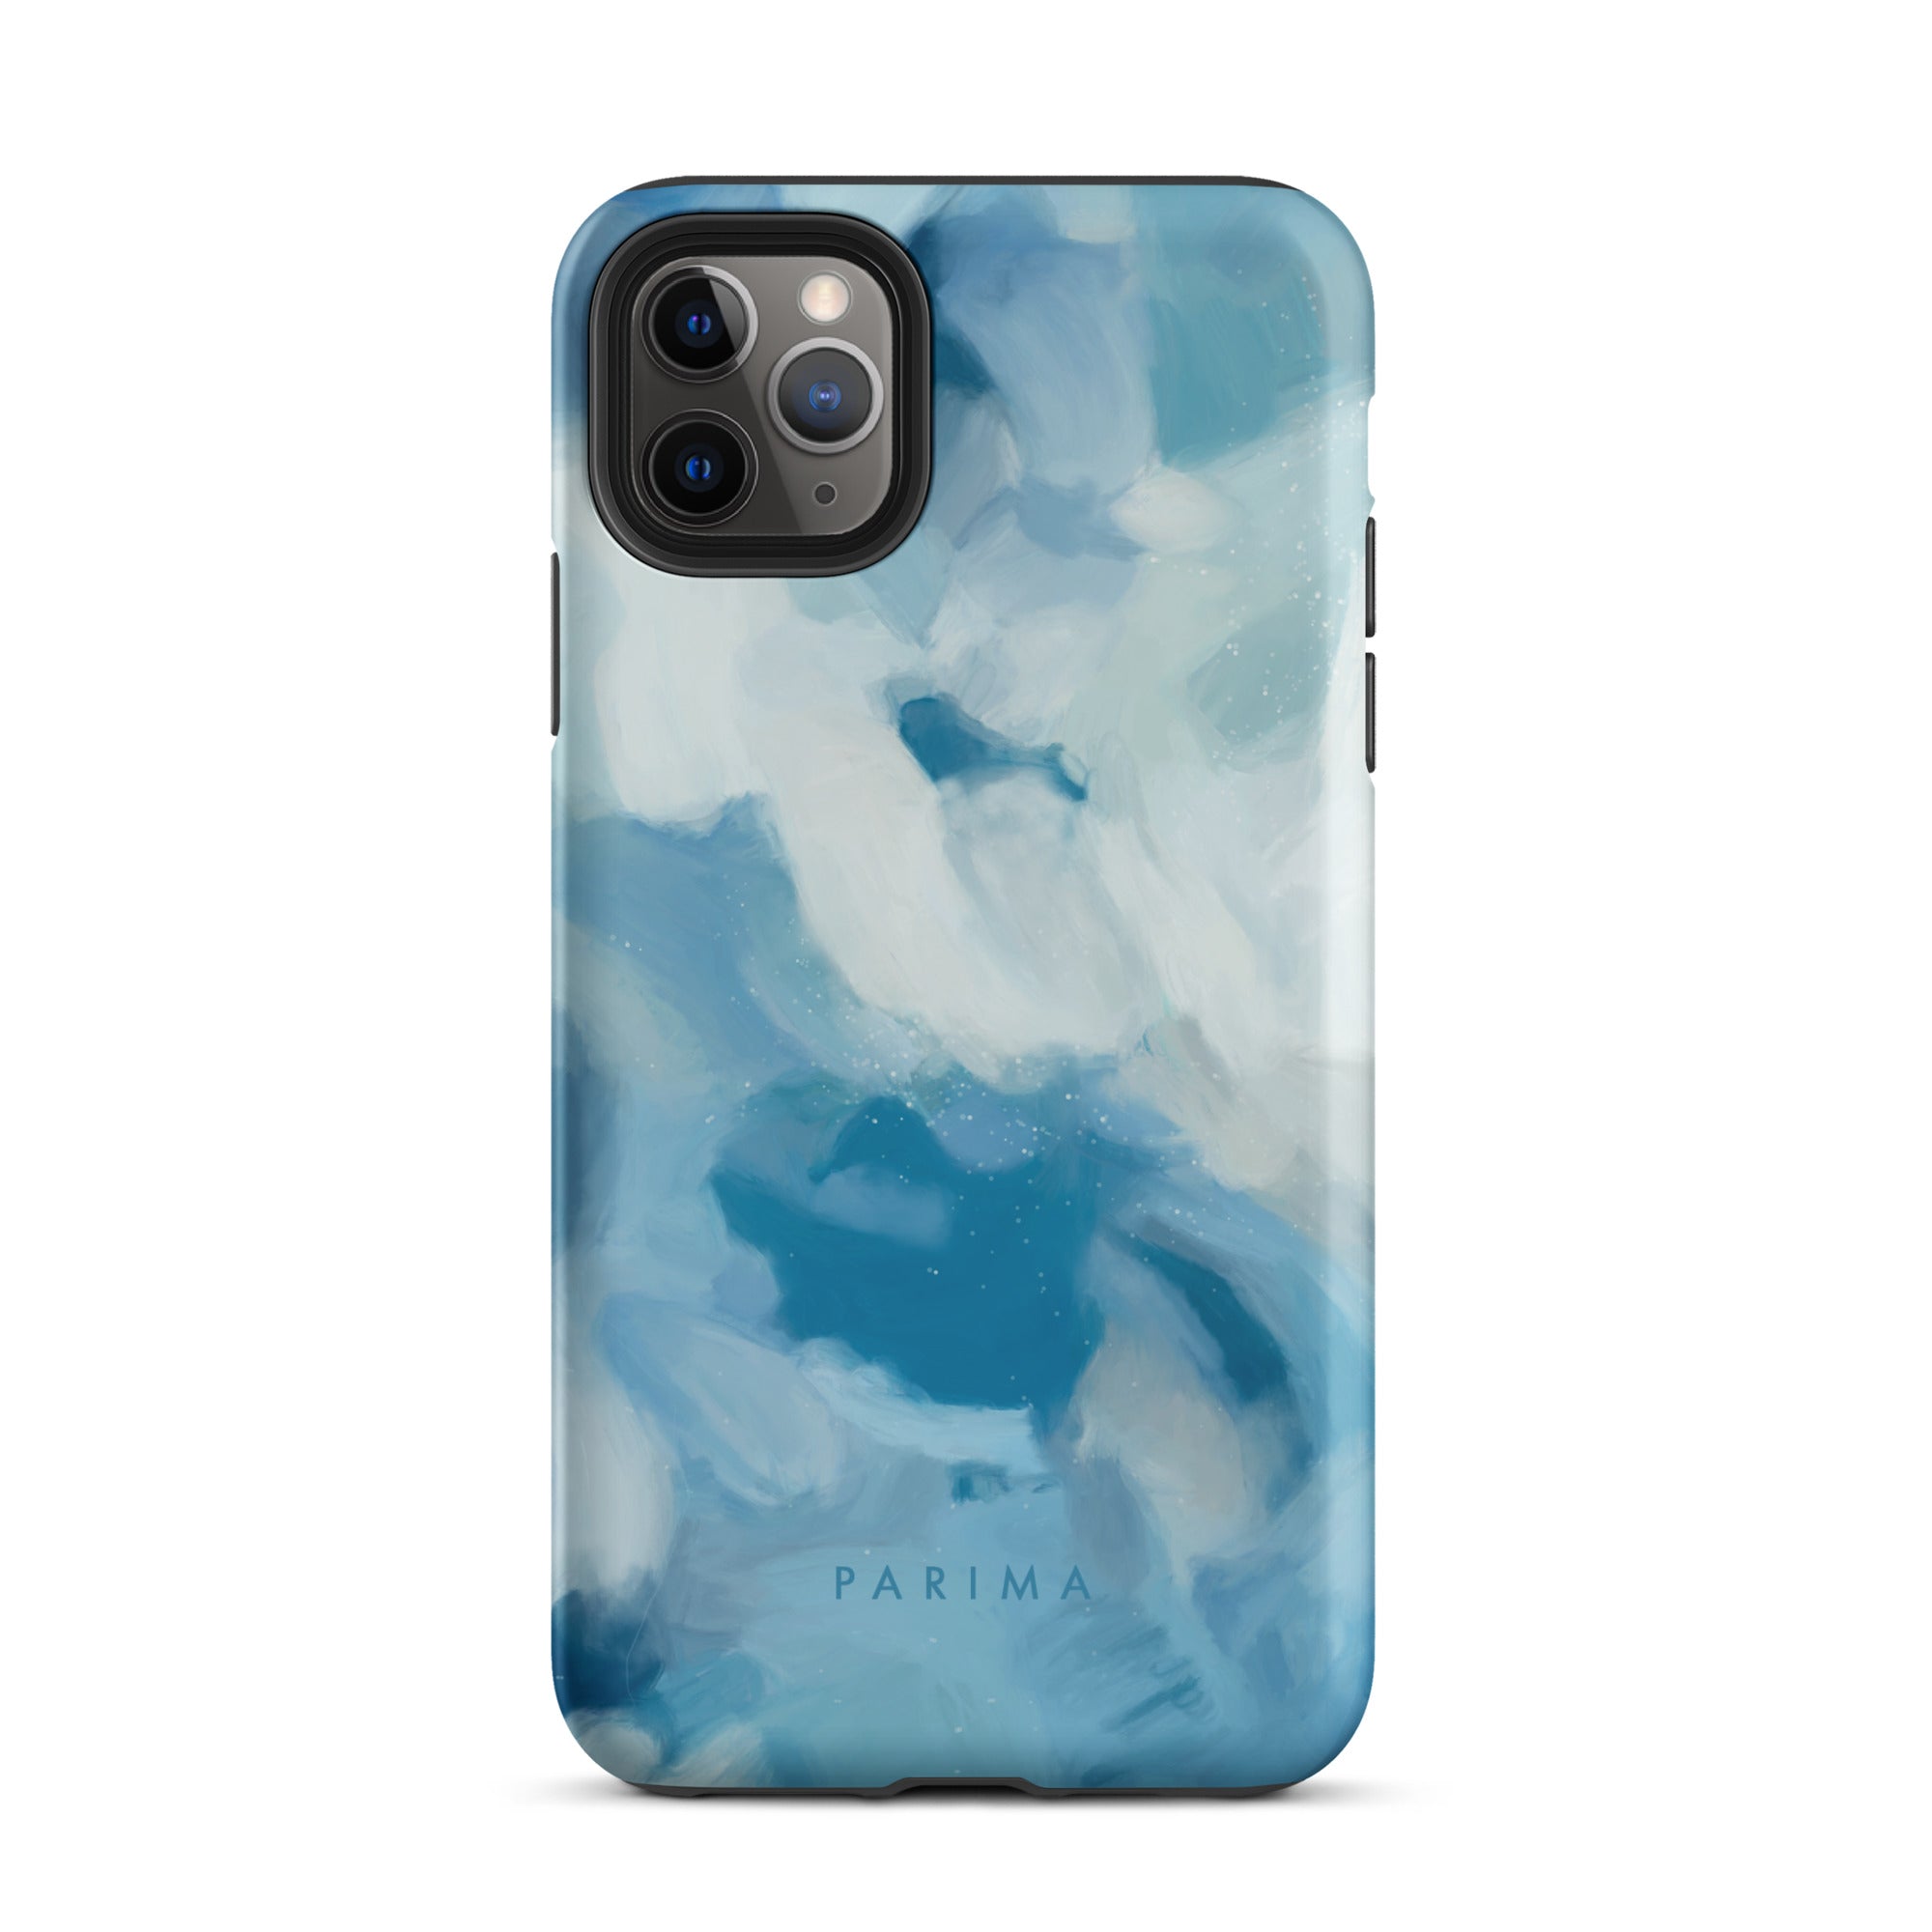 Liviana, blue abstract art - iPhone 11 Pro Max tough case by Parima Studio